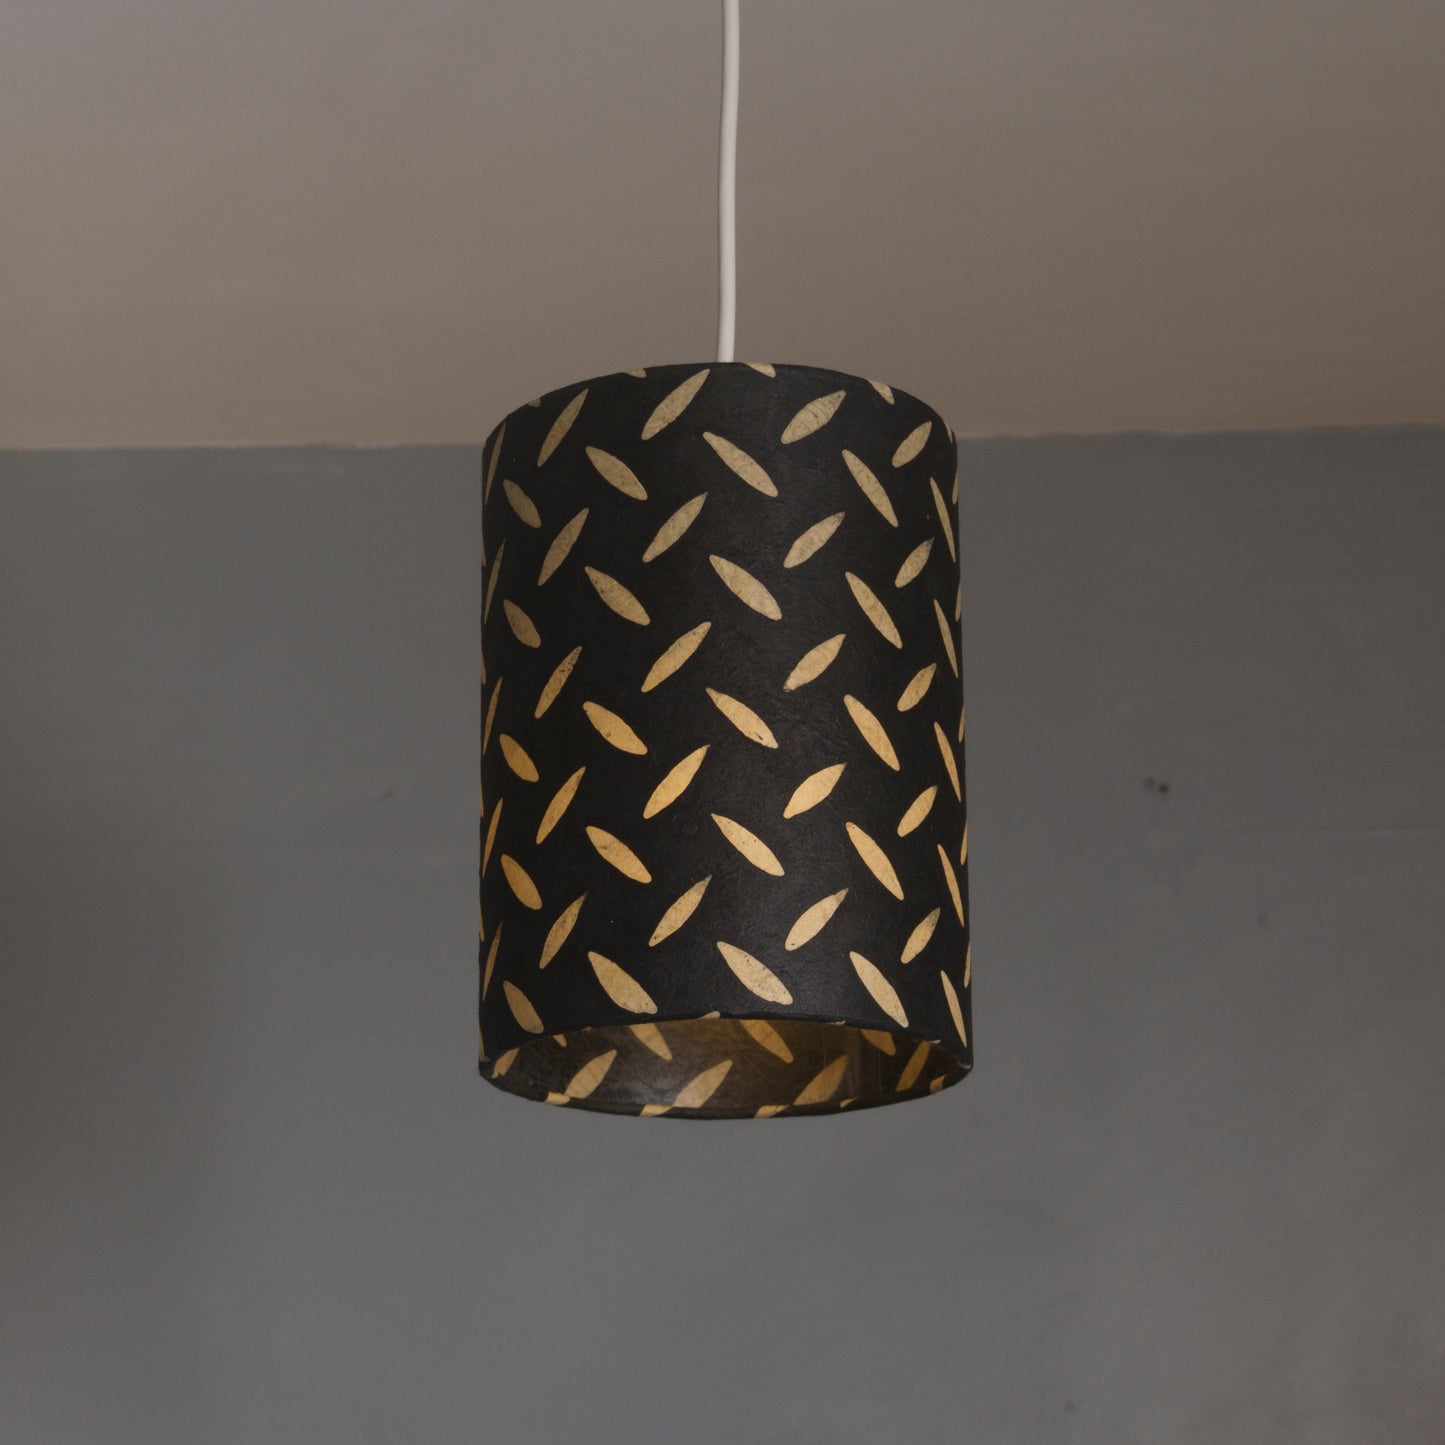 Oval Lamp Shade - P11 - Batik Tread Plate Black, 40cm(w) x 20cm(h) x 30cm(d)